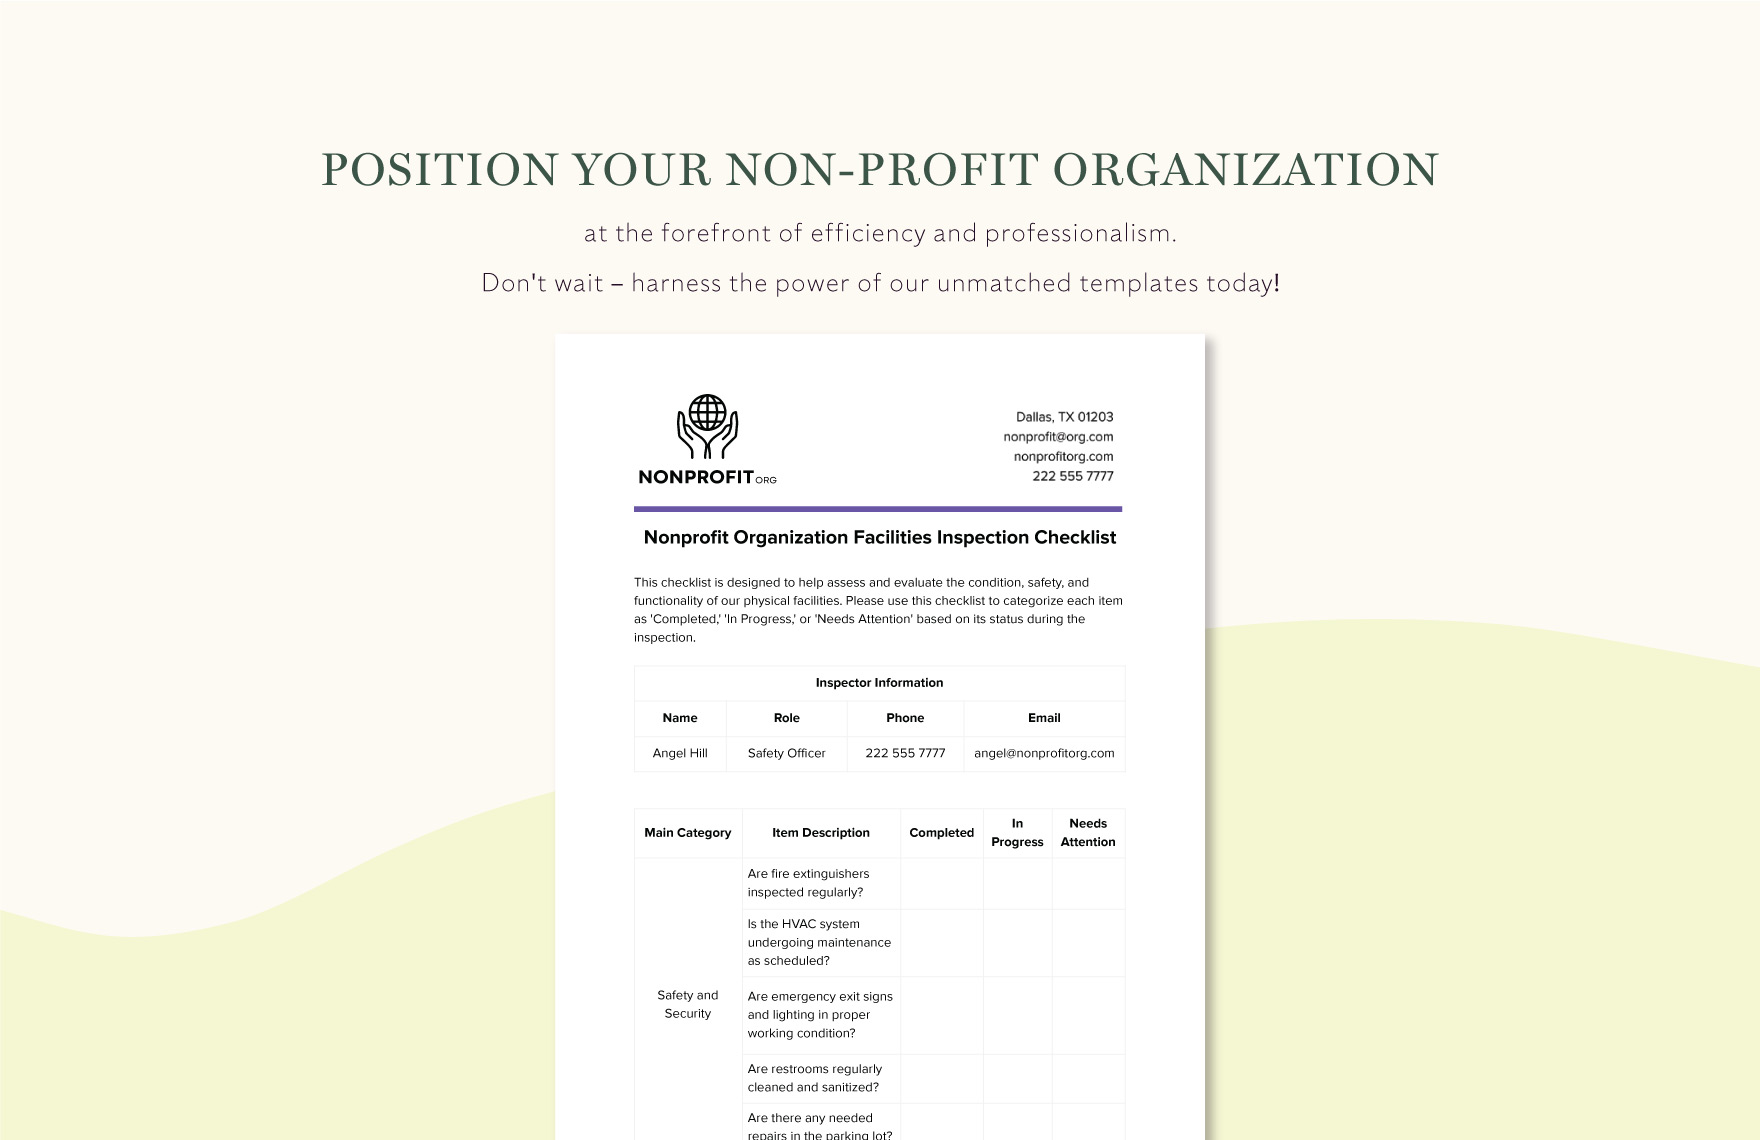 Nonprofit Organization Facilities Inspection Checklist Template